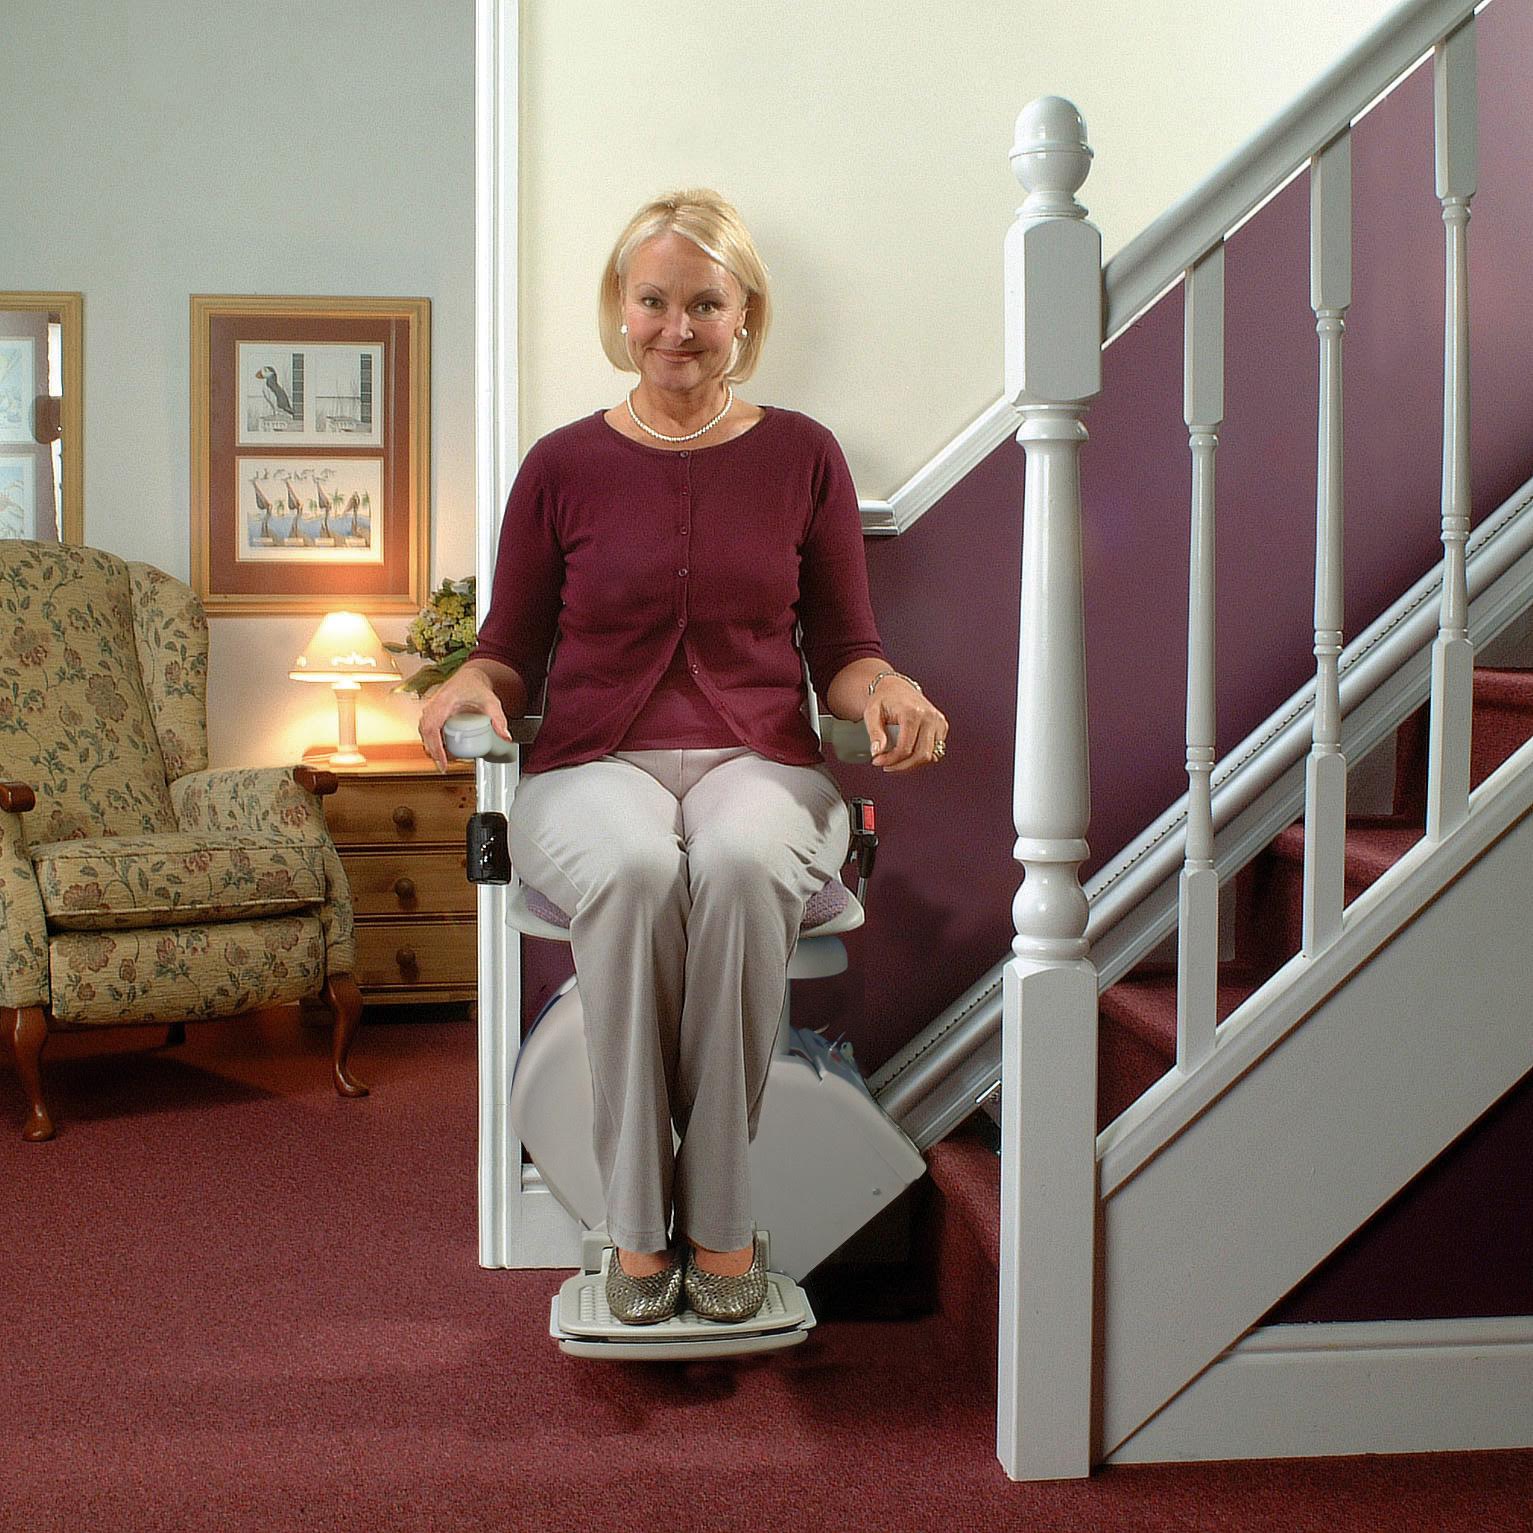 San Bernardino curved stair lift chair for elderly